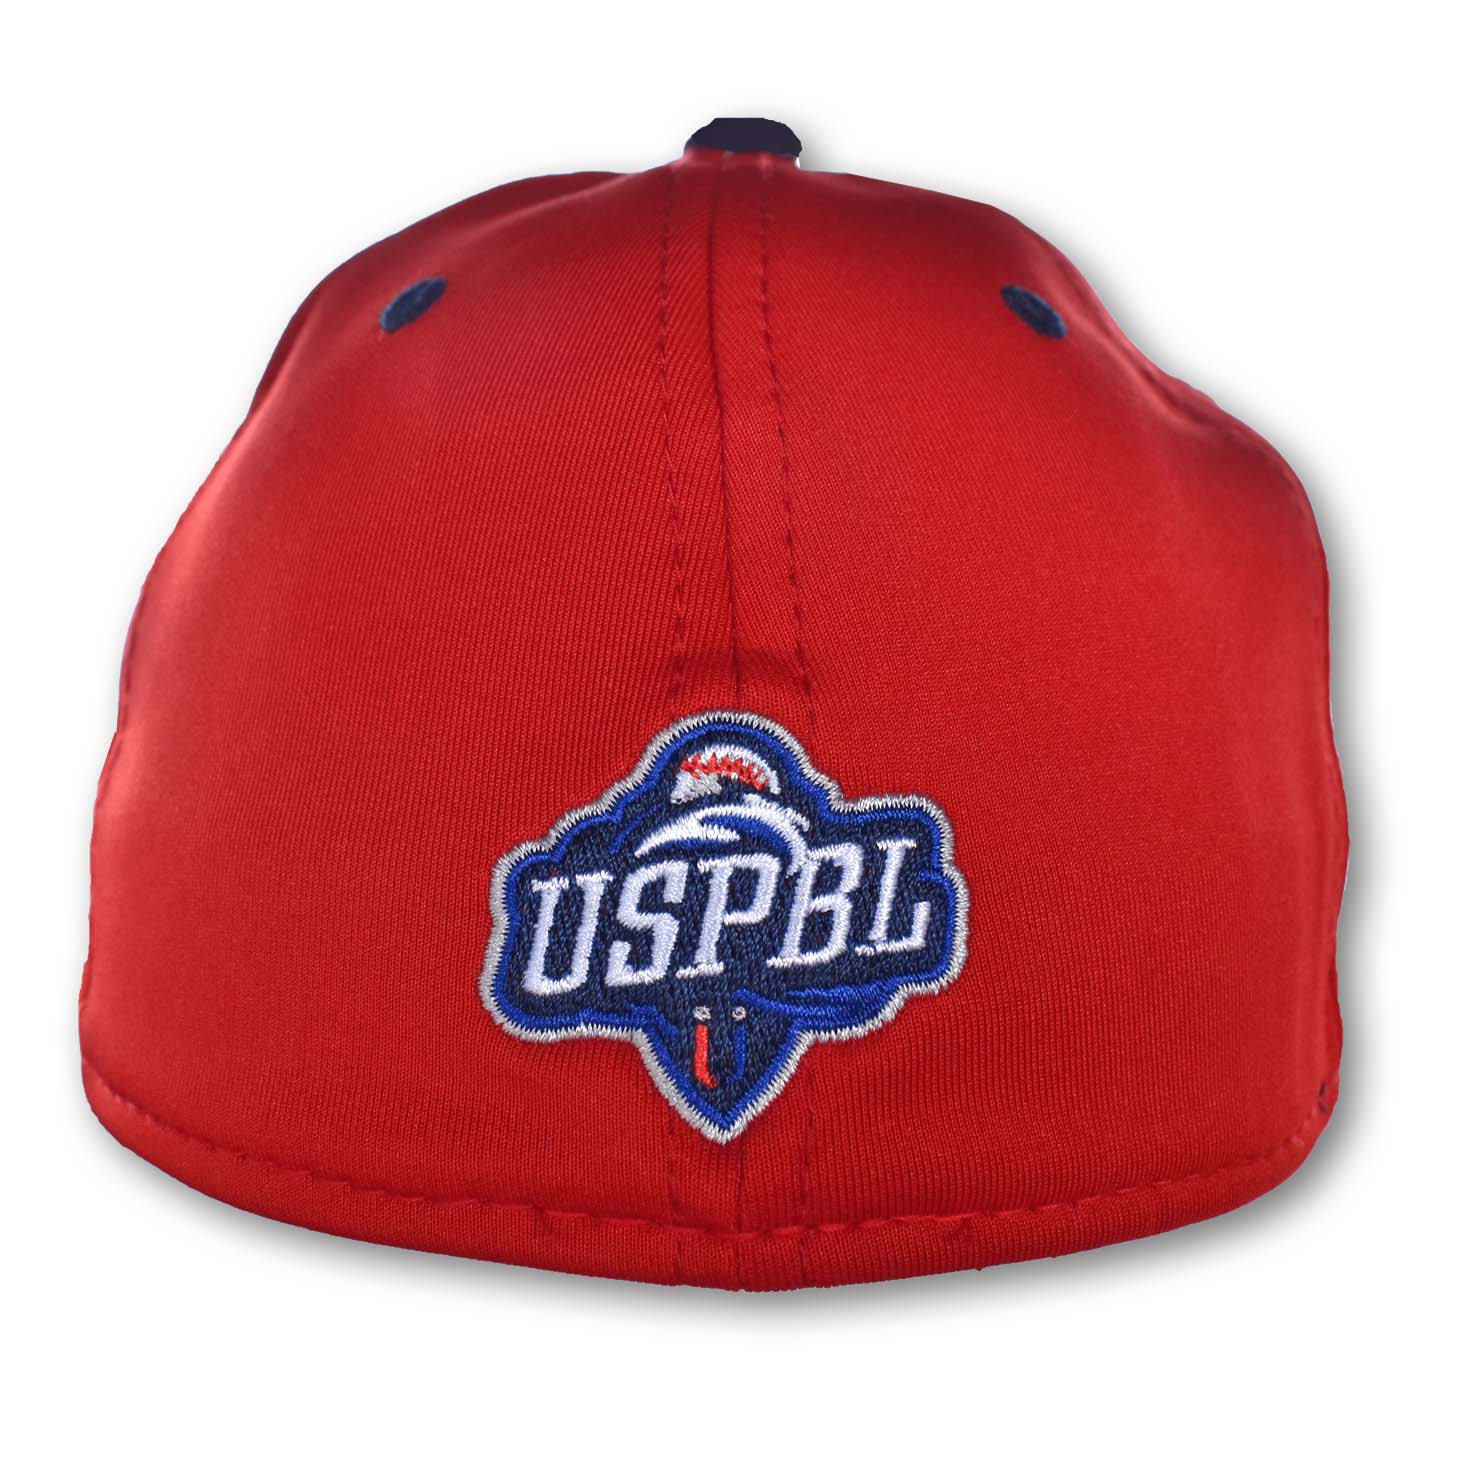 Beavers Red Away Game Hat Professional United (USPBL) League - Shore Baseball